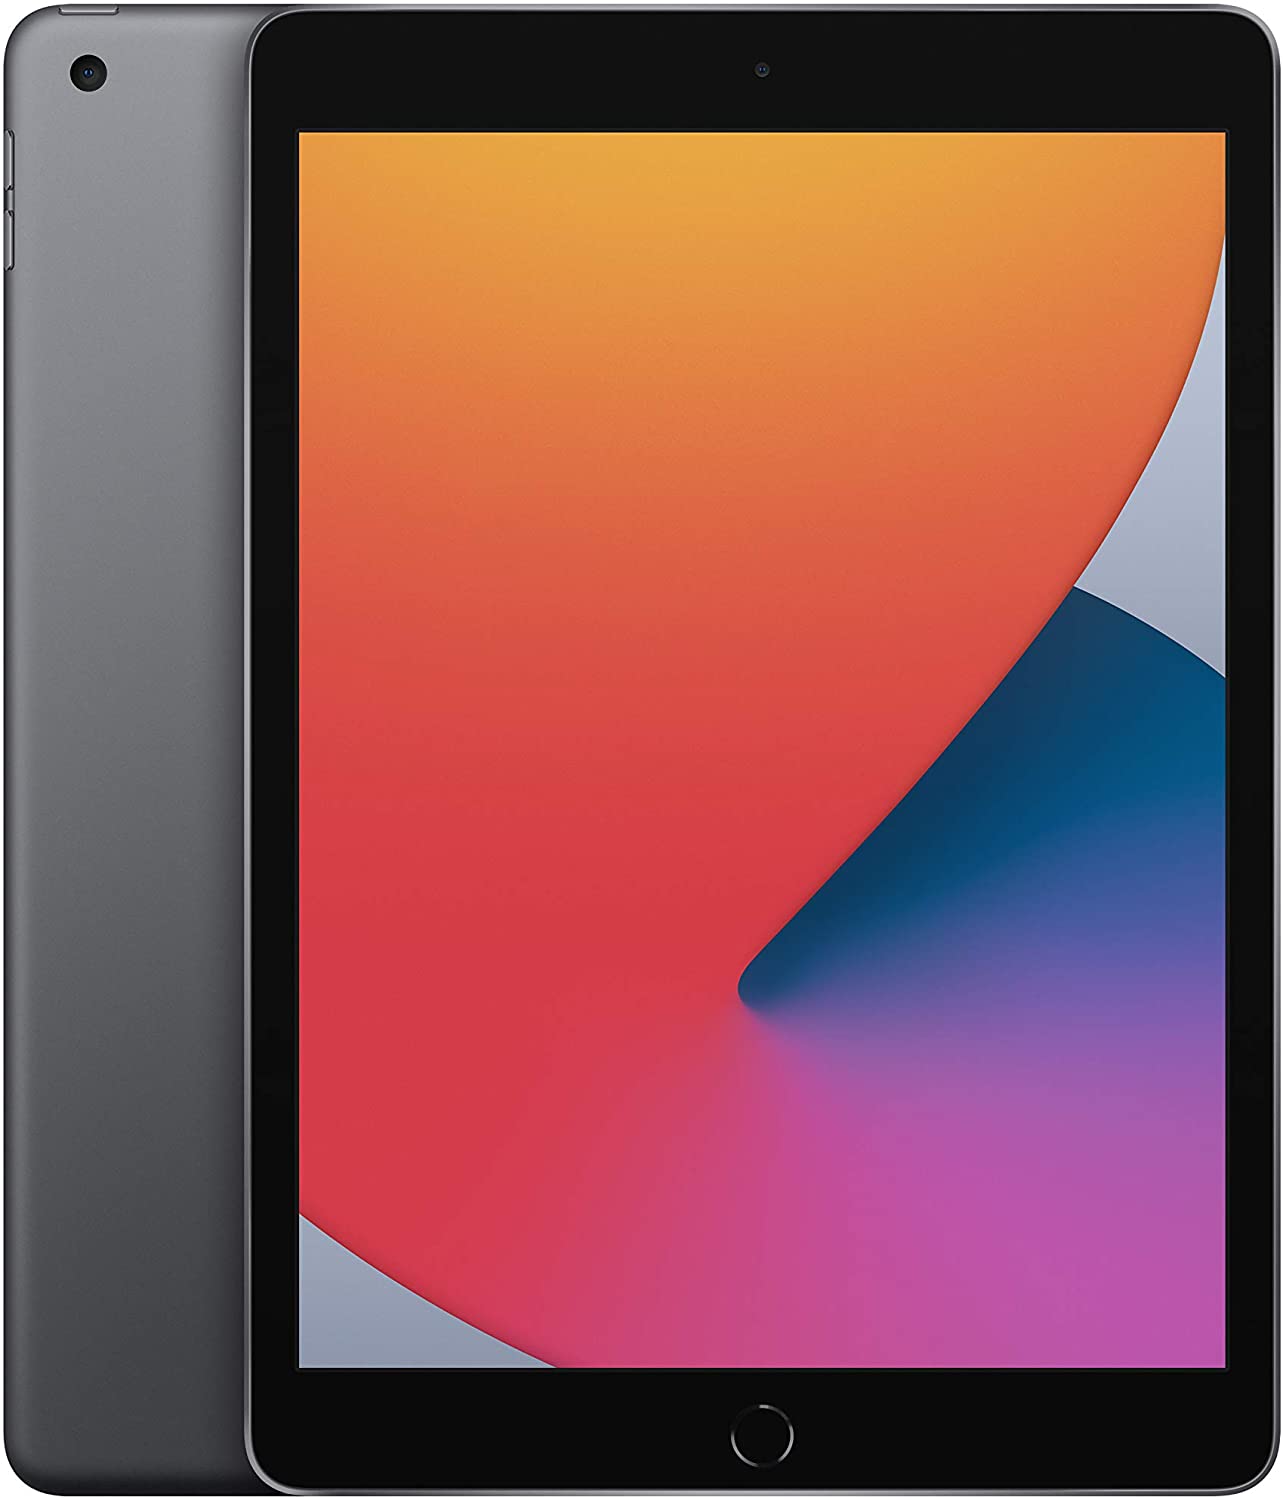 128GB Apple iPad 8th Gen 10.2" Wi-Fi Tablet (Latest Model 8th Generation) $380 + FS at Amazon / Best Buy